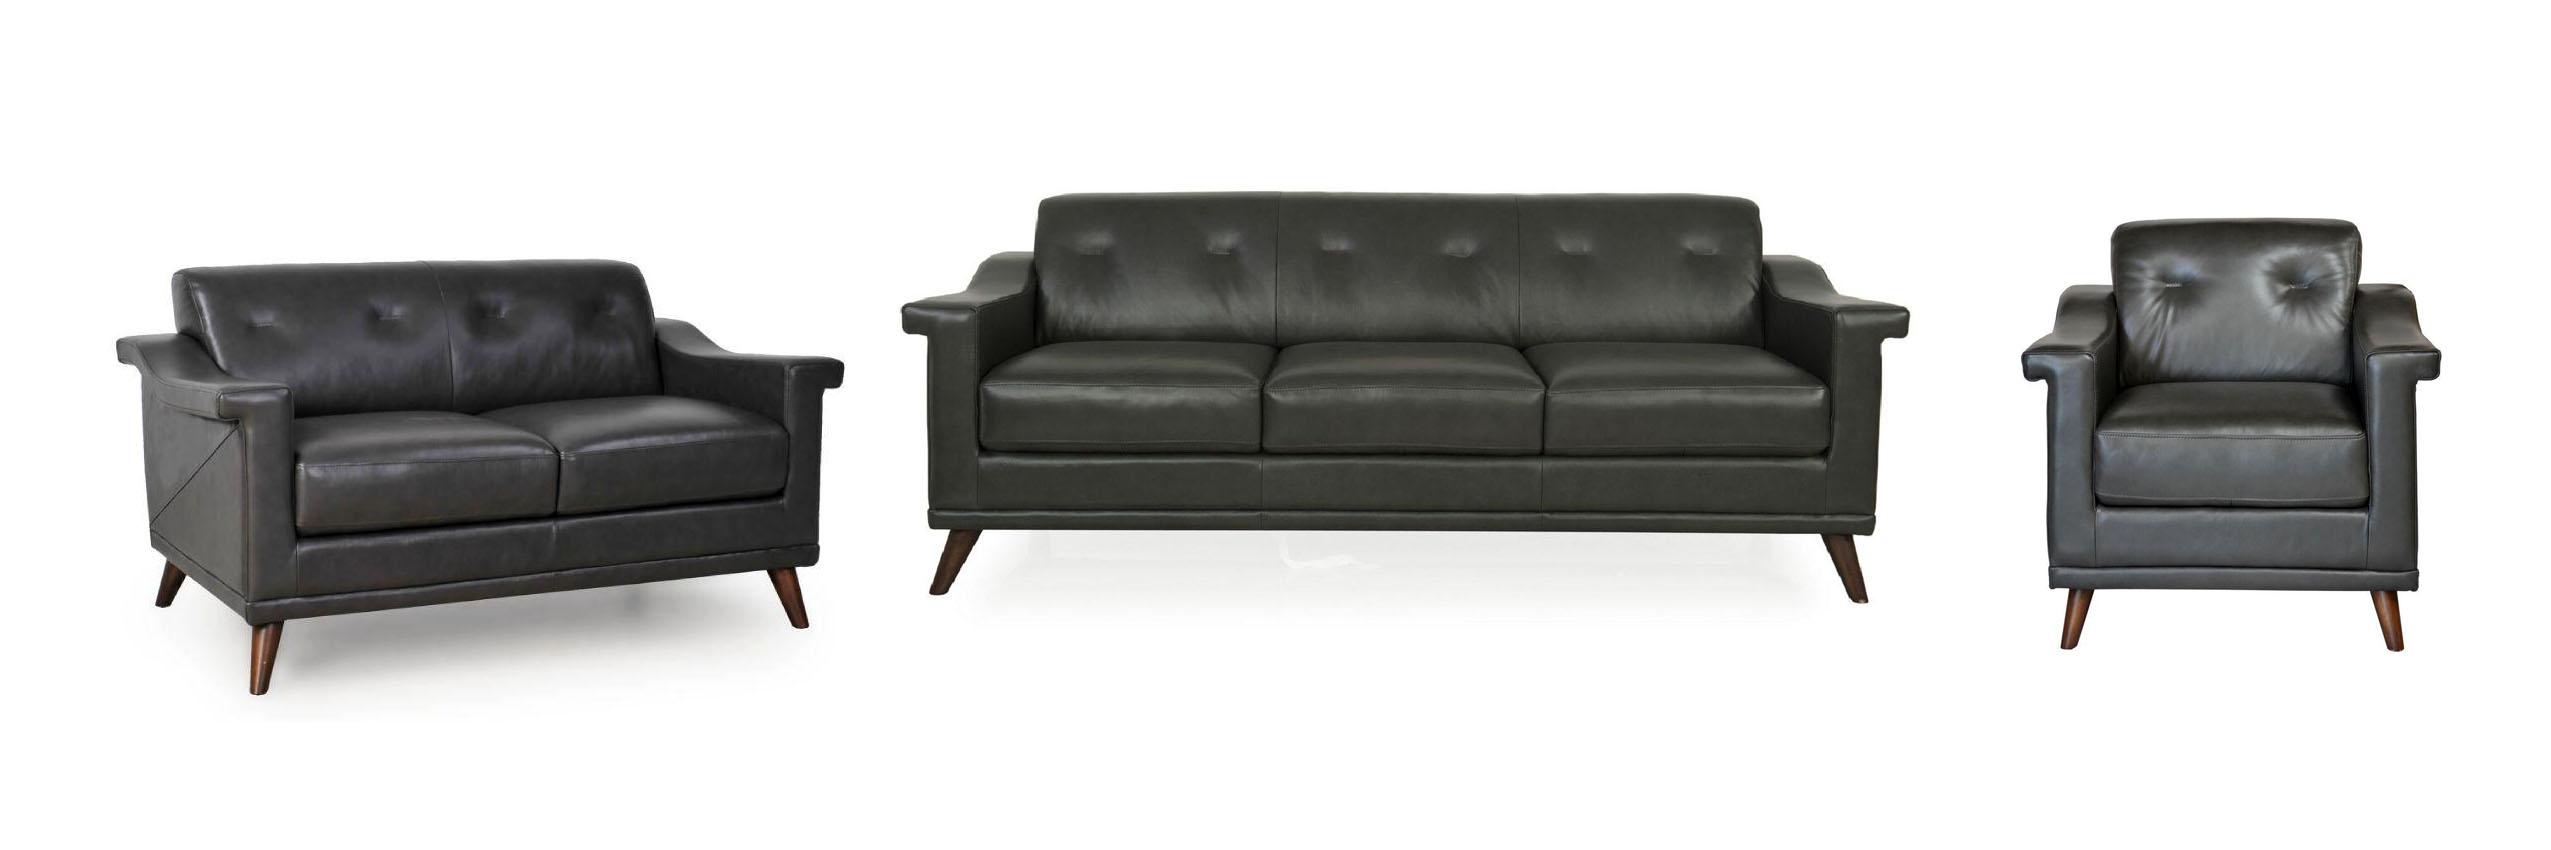 

    
Moroni Kak 356 Charcoal Grey Full Leather Mid-Century Sofa Set 3 Pcs Modern
